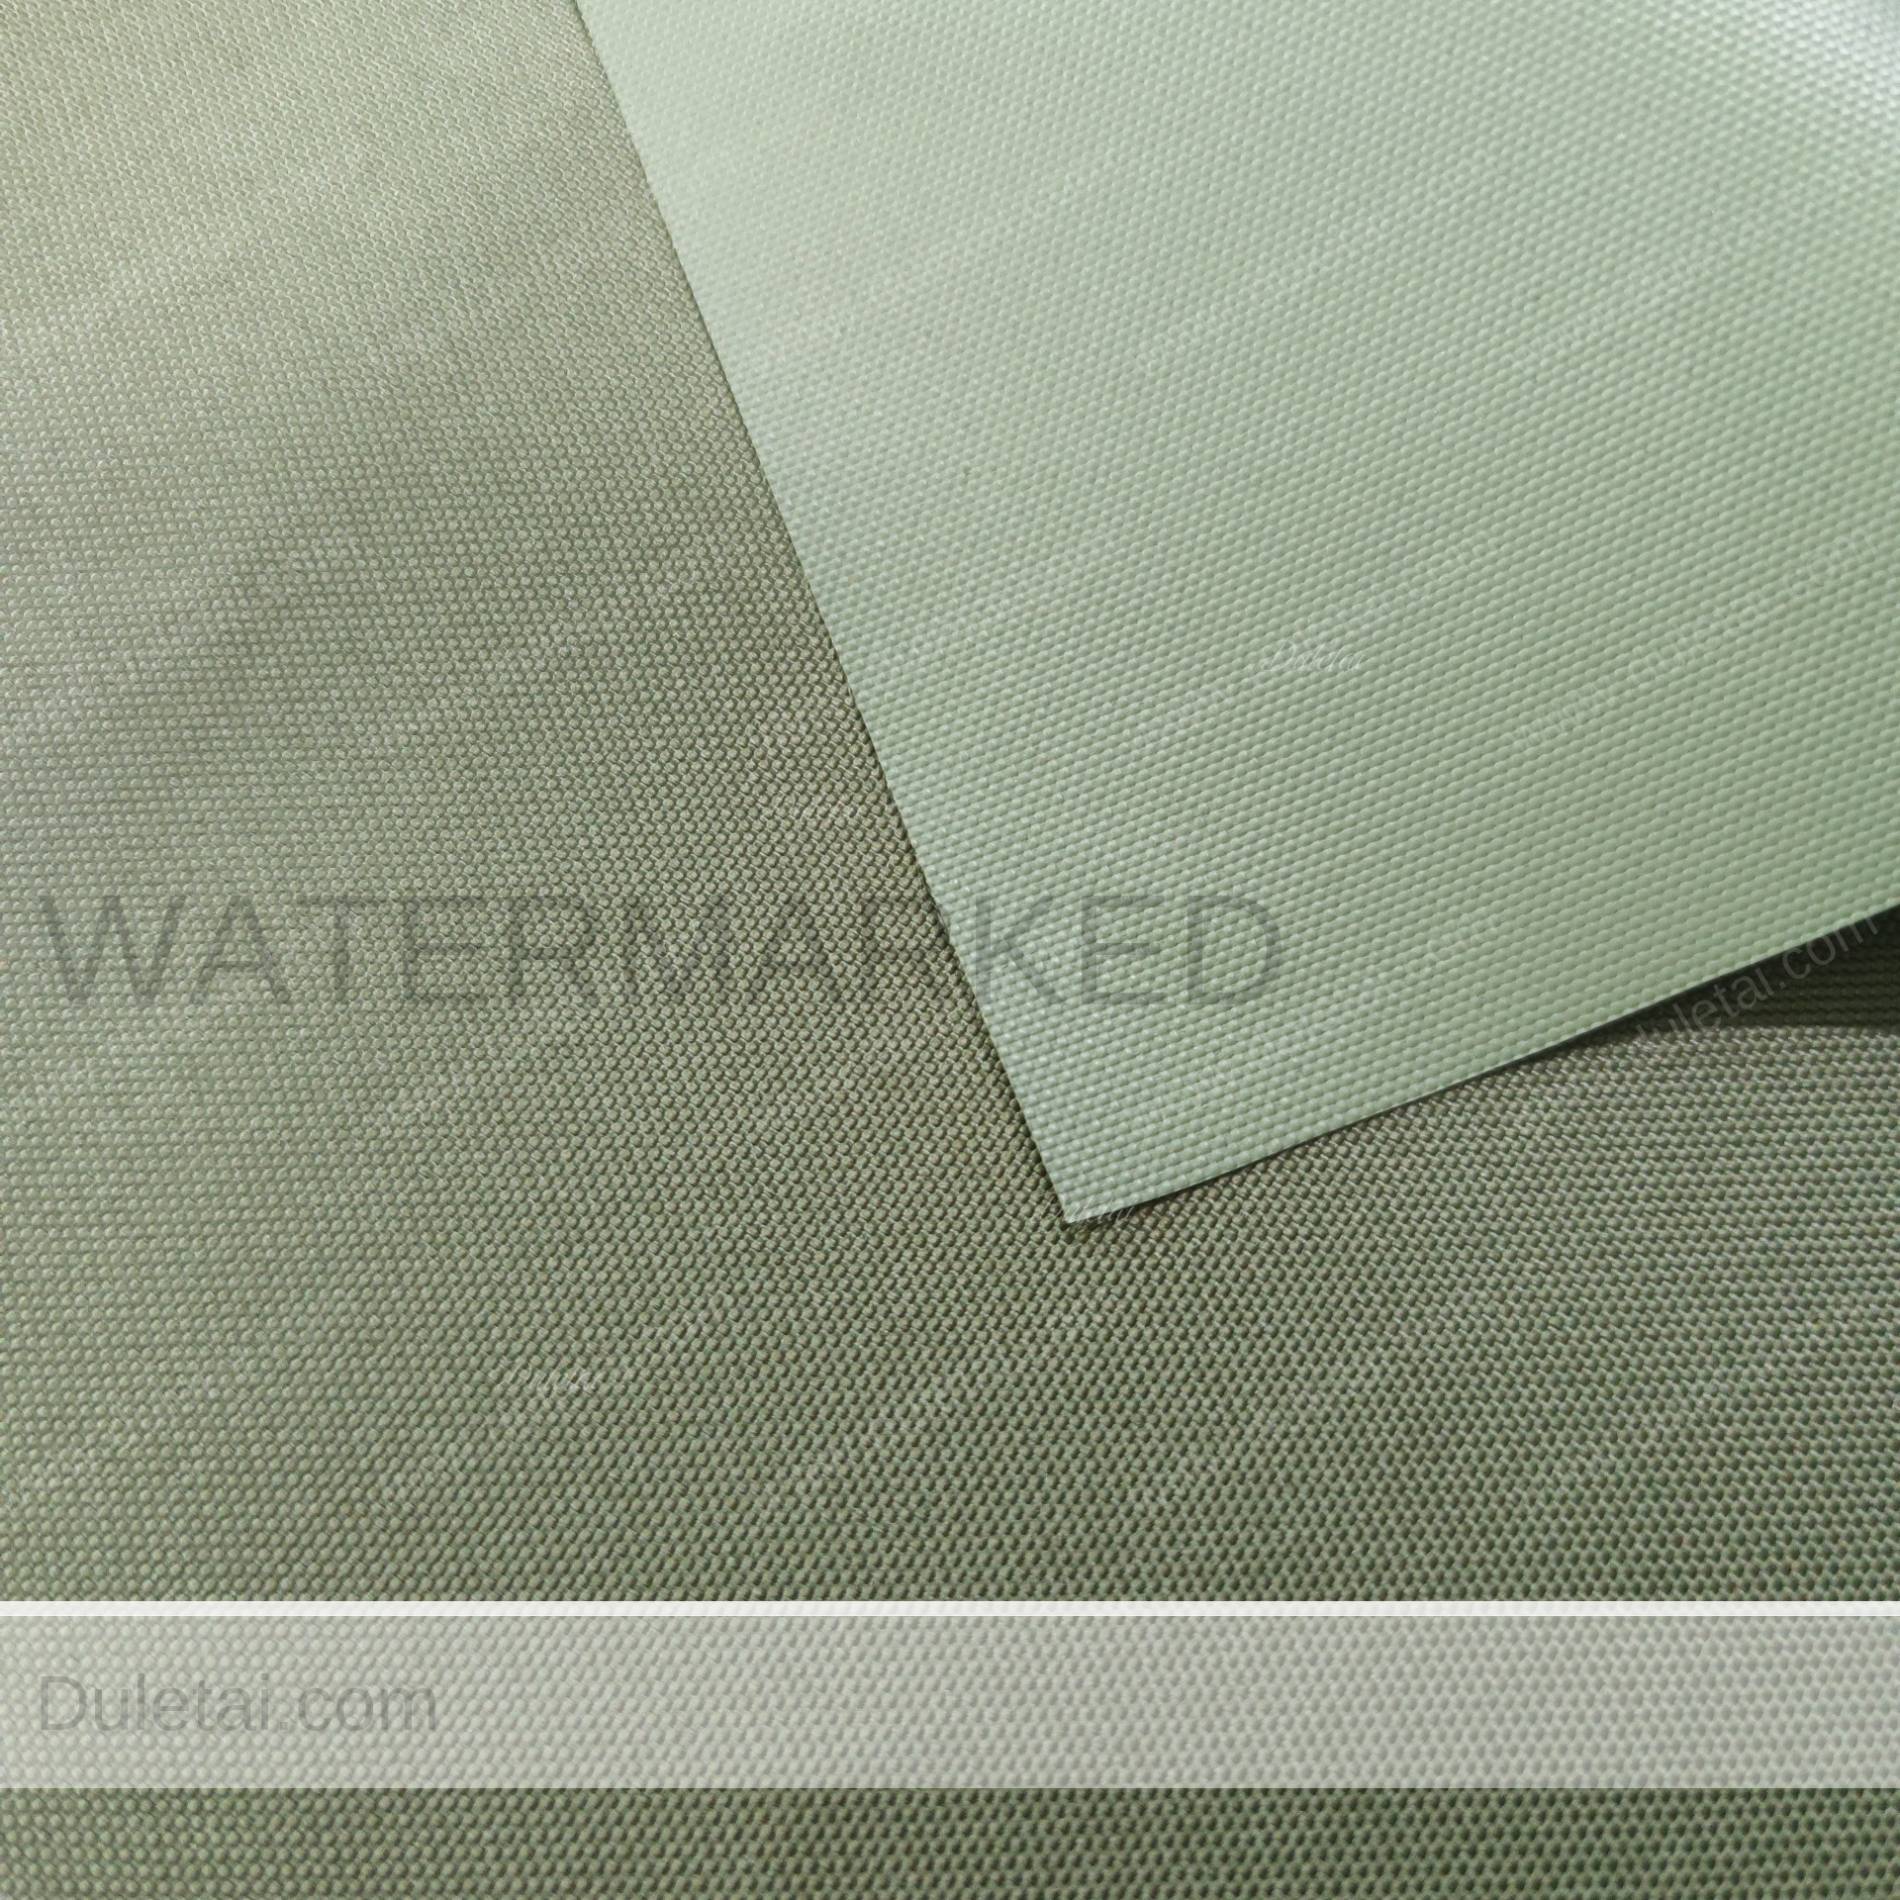 Waterproof Fire Retardant Fabric  600d Oxford Fabric Waterproof -  50/100x150cm 600d - Aliexpress